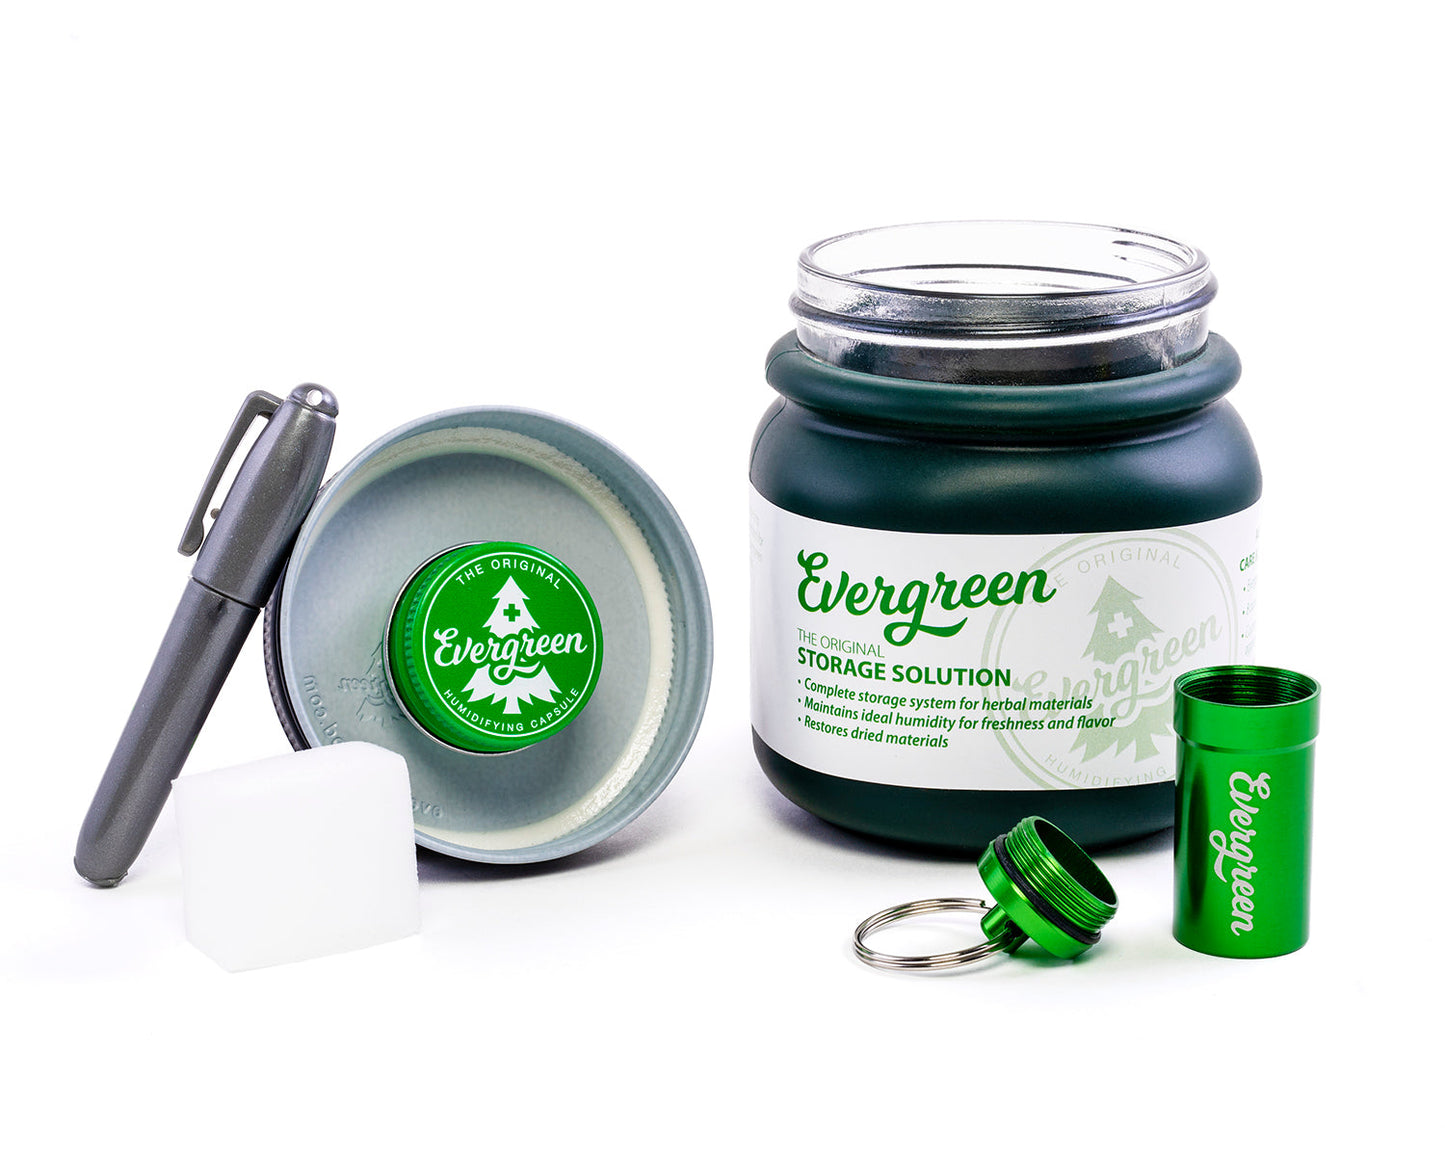 Evergreen Storage Solution open showing contents dark green